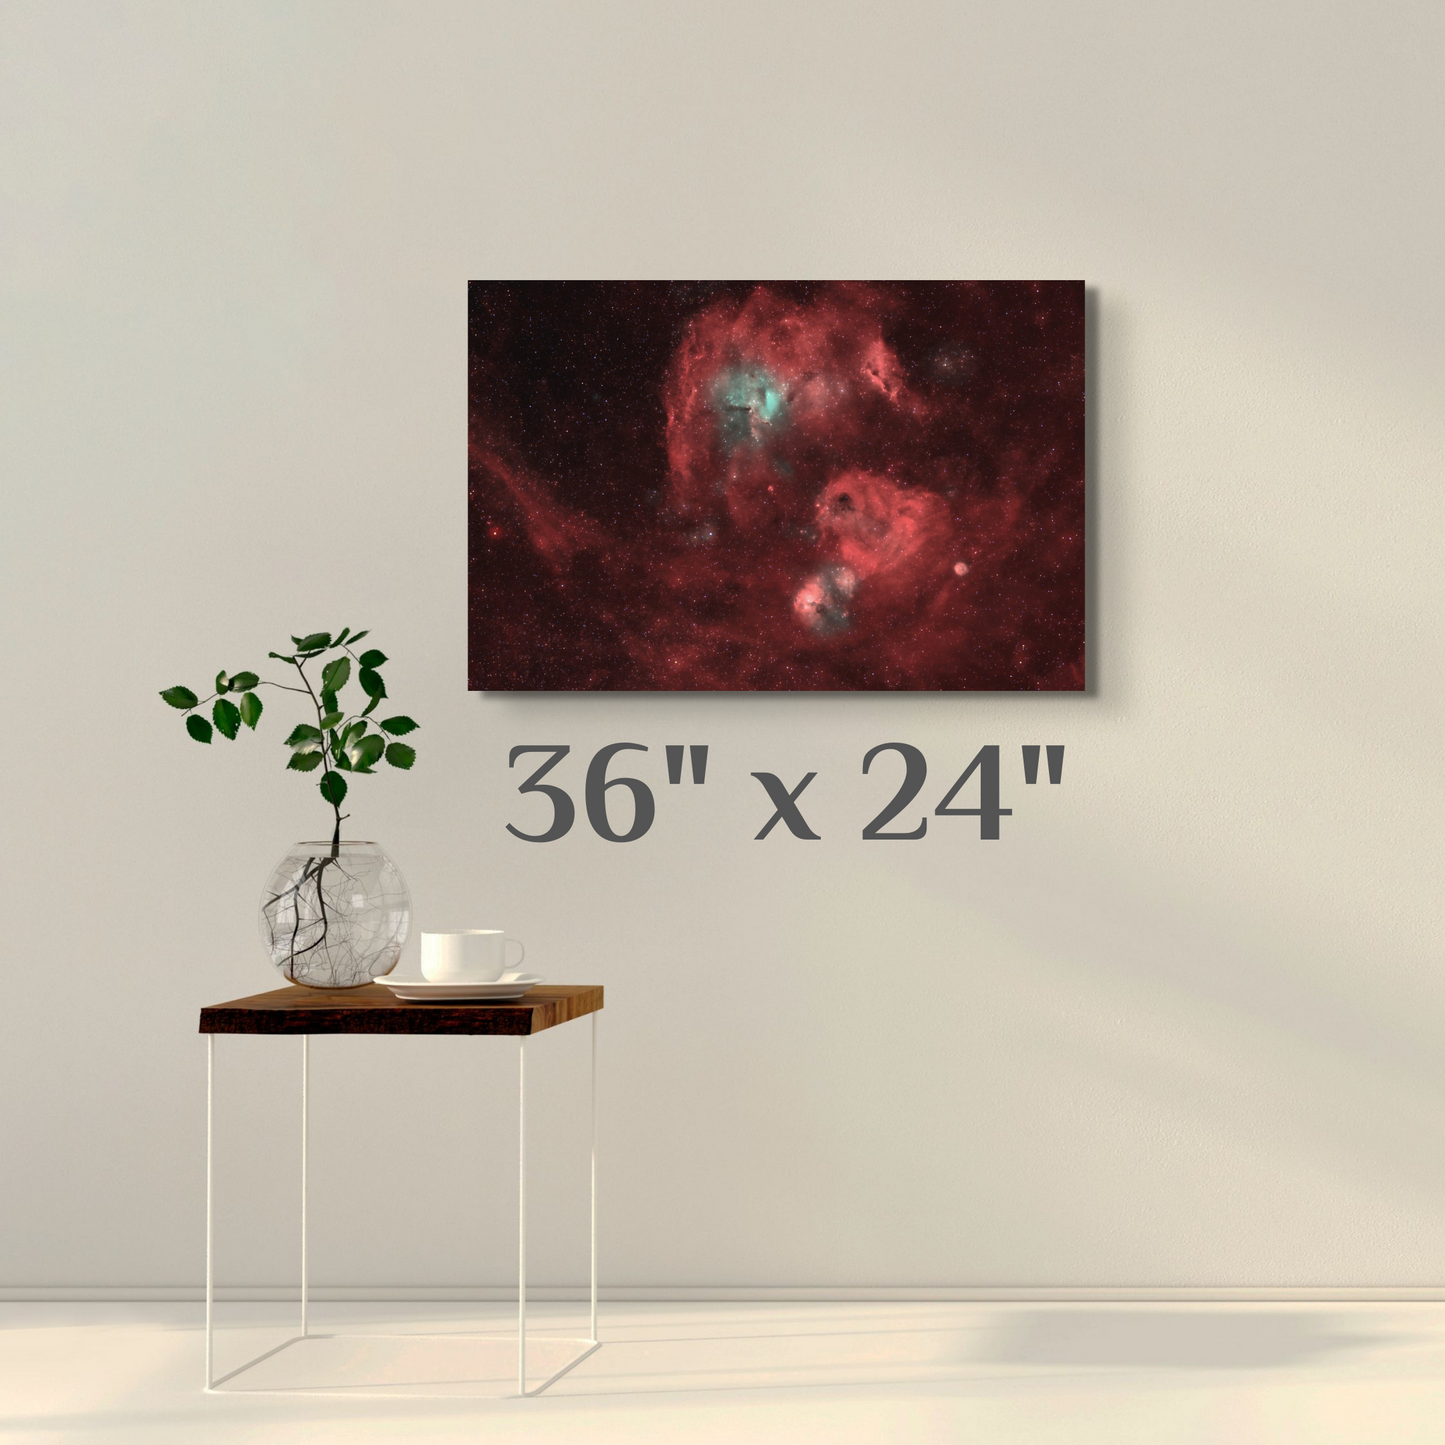 "Sivan 5 & 6 - Seadog Nebula"